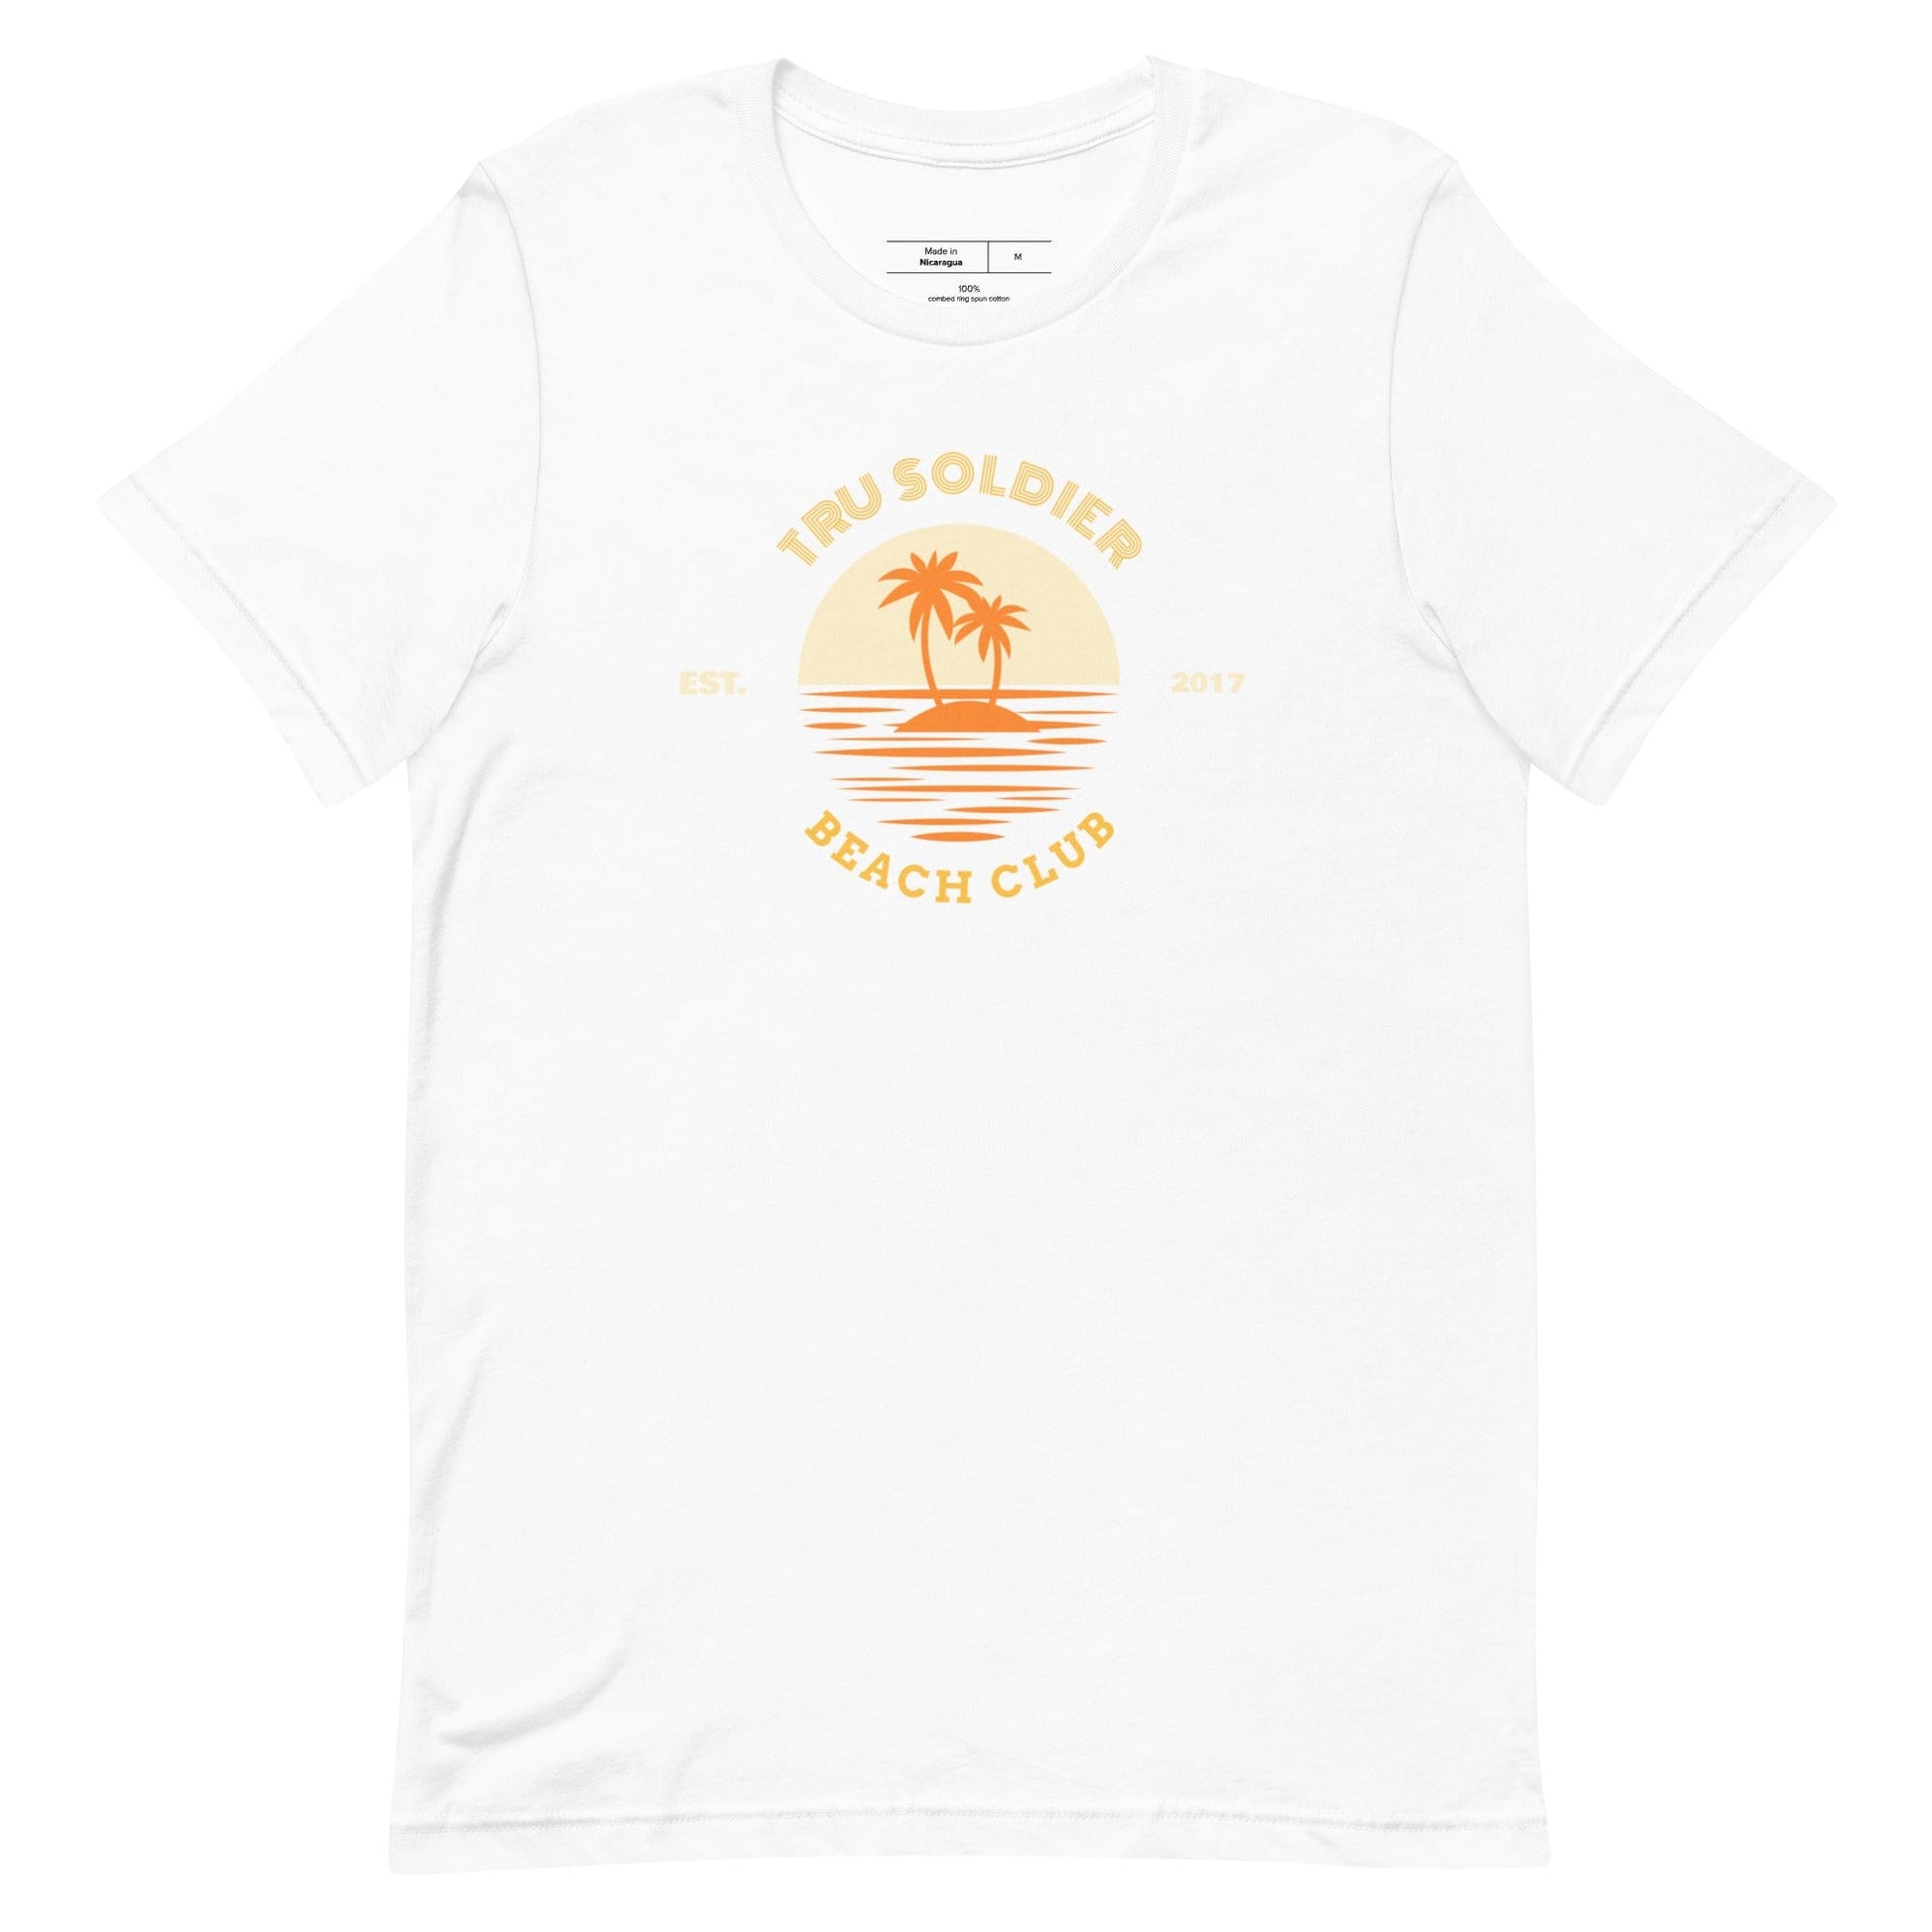 Tru Soldier Sportswear  White / XS Beach Club t-shirt